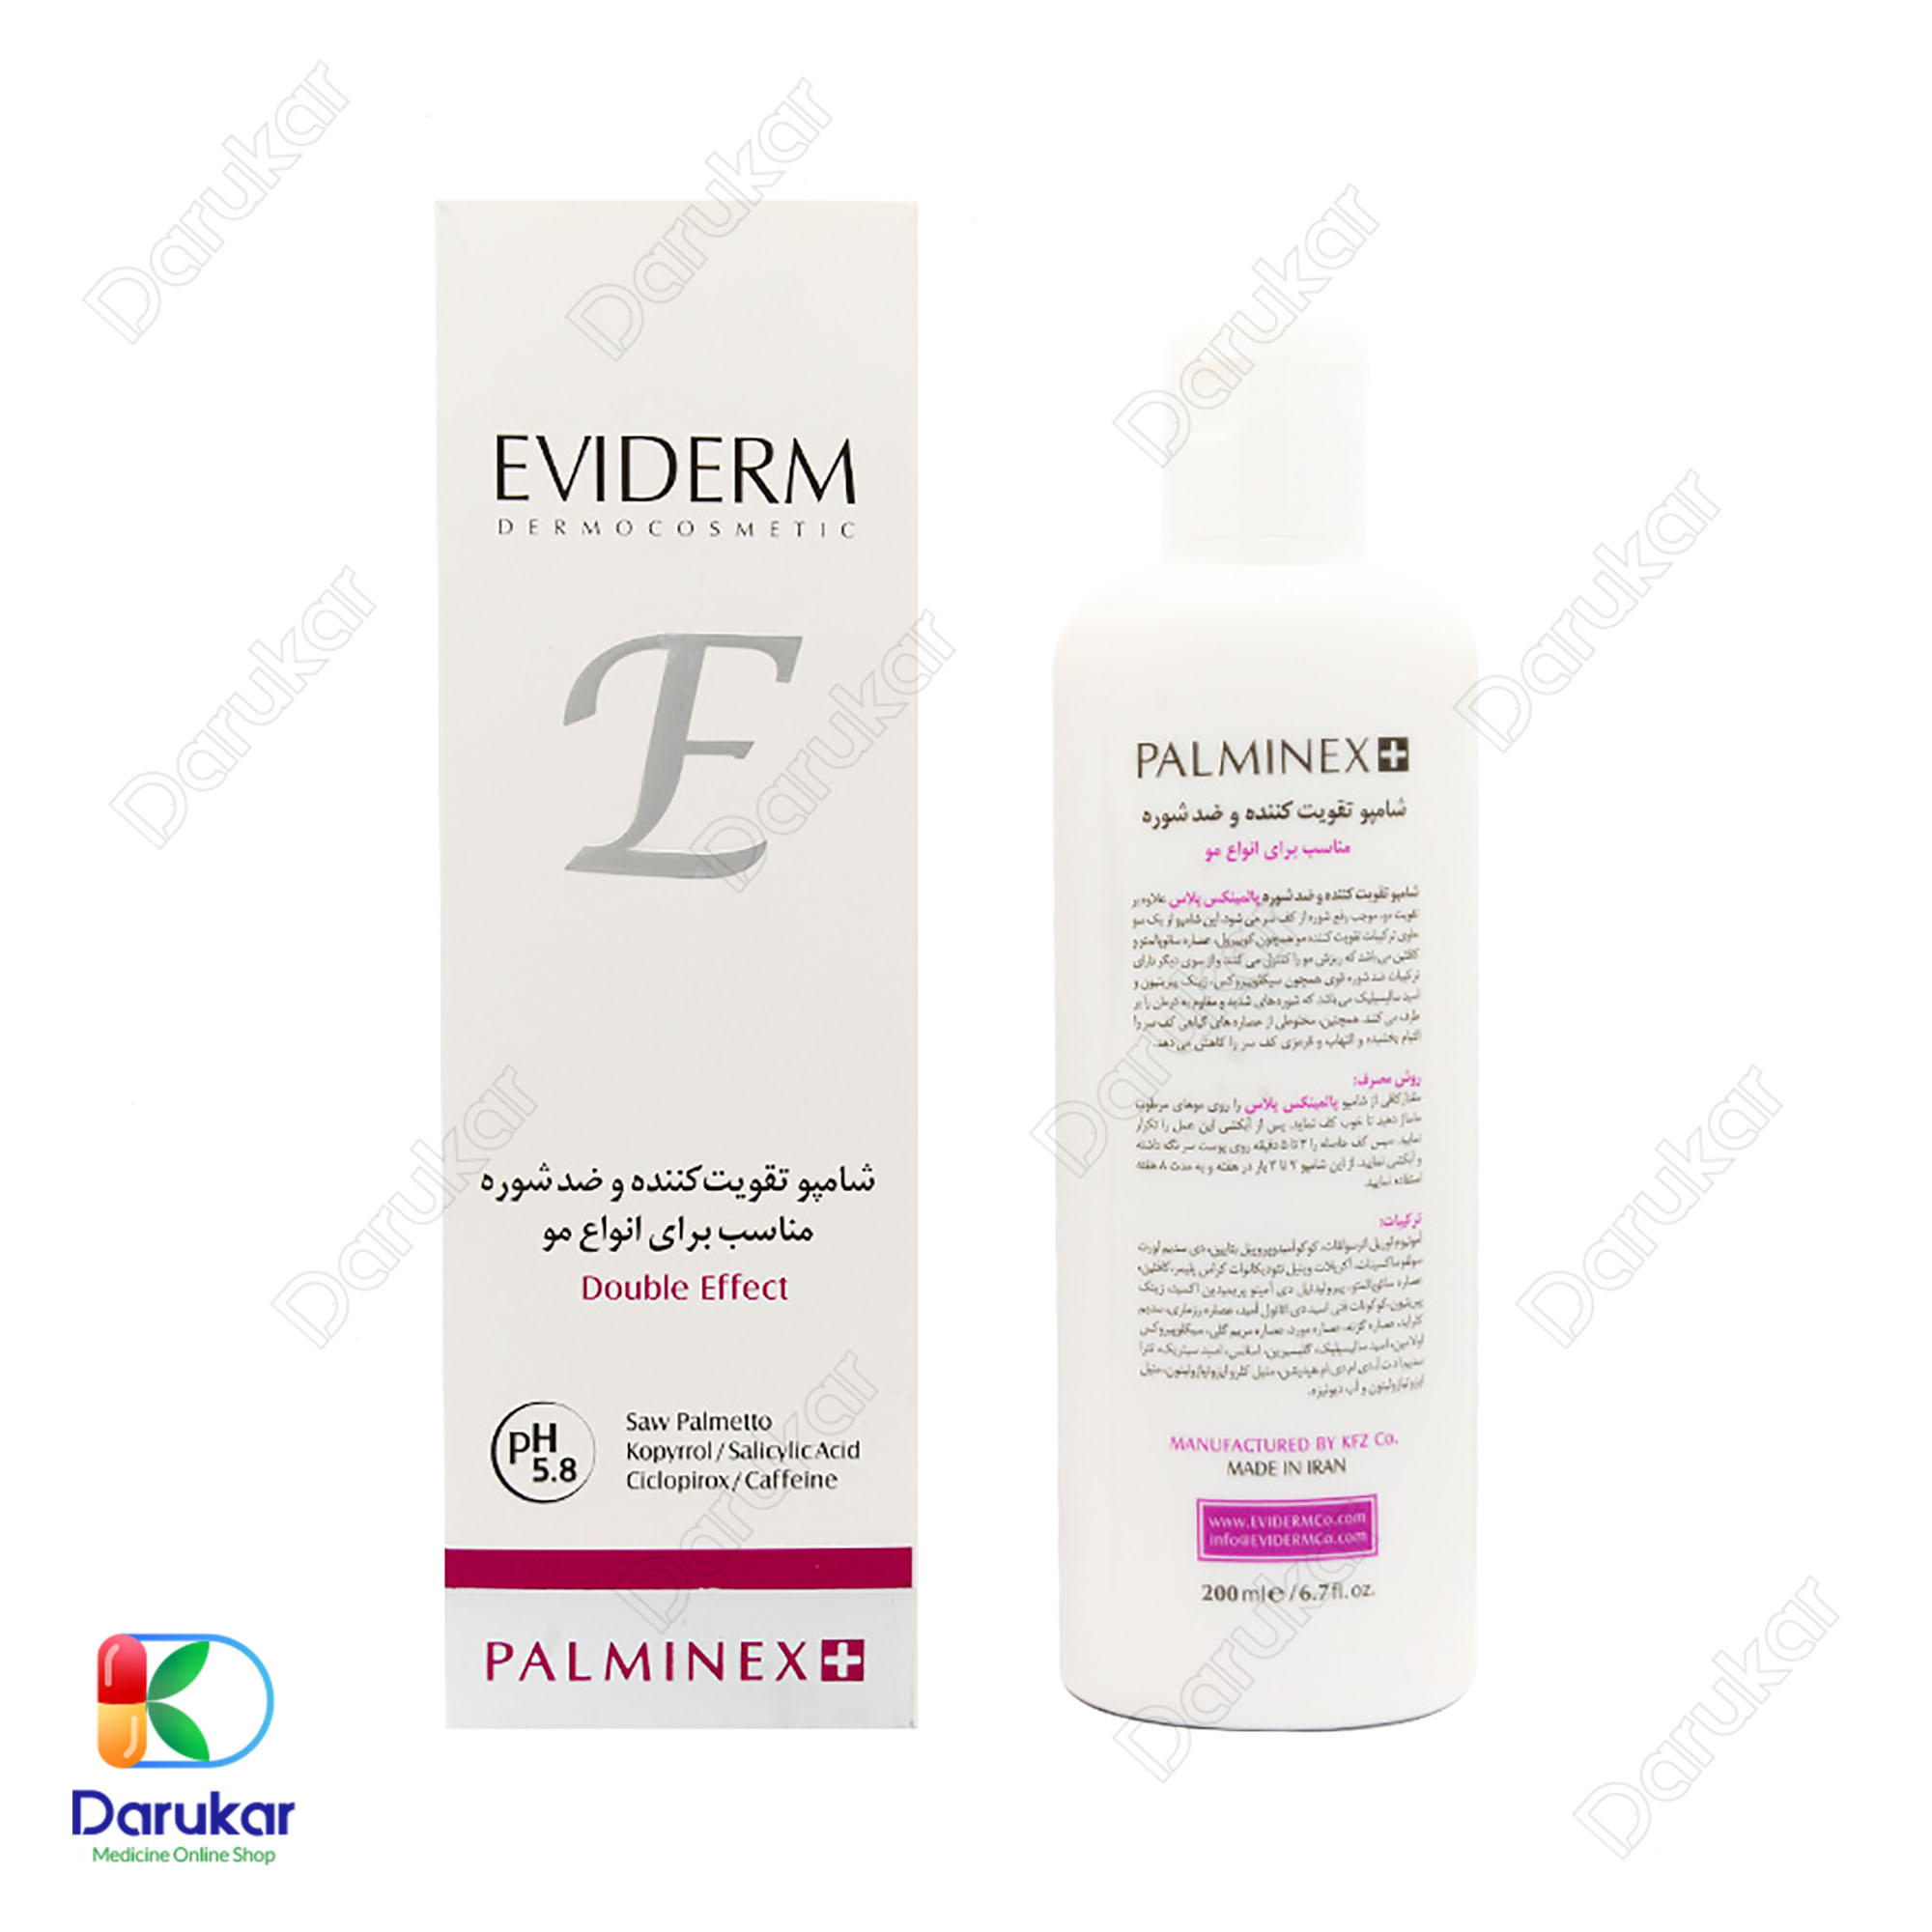 Eviderm Palminex Plus Anti Hair Loss And Anti Dandruff Shampoo 2